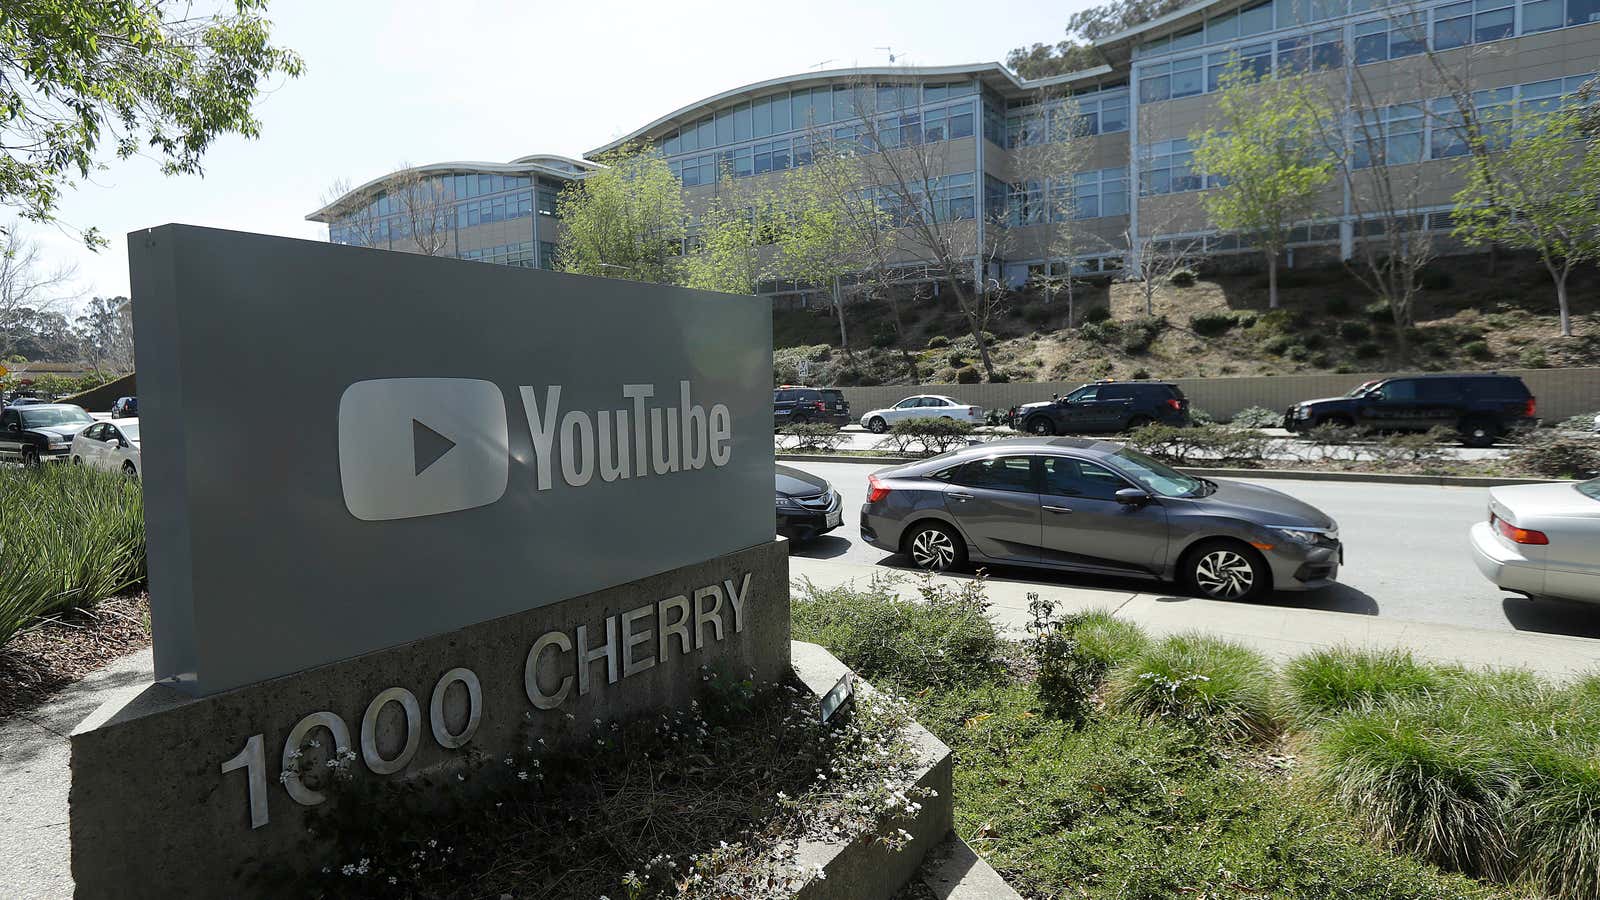 YouTube’s headquarters in San Bruno, CA